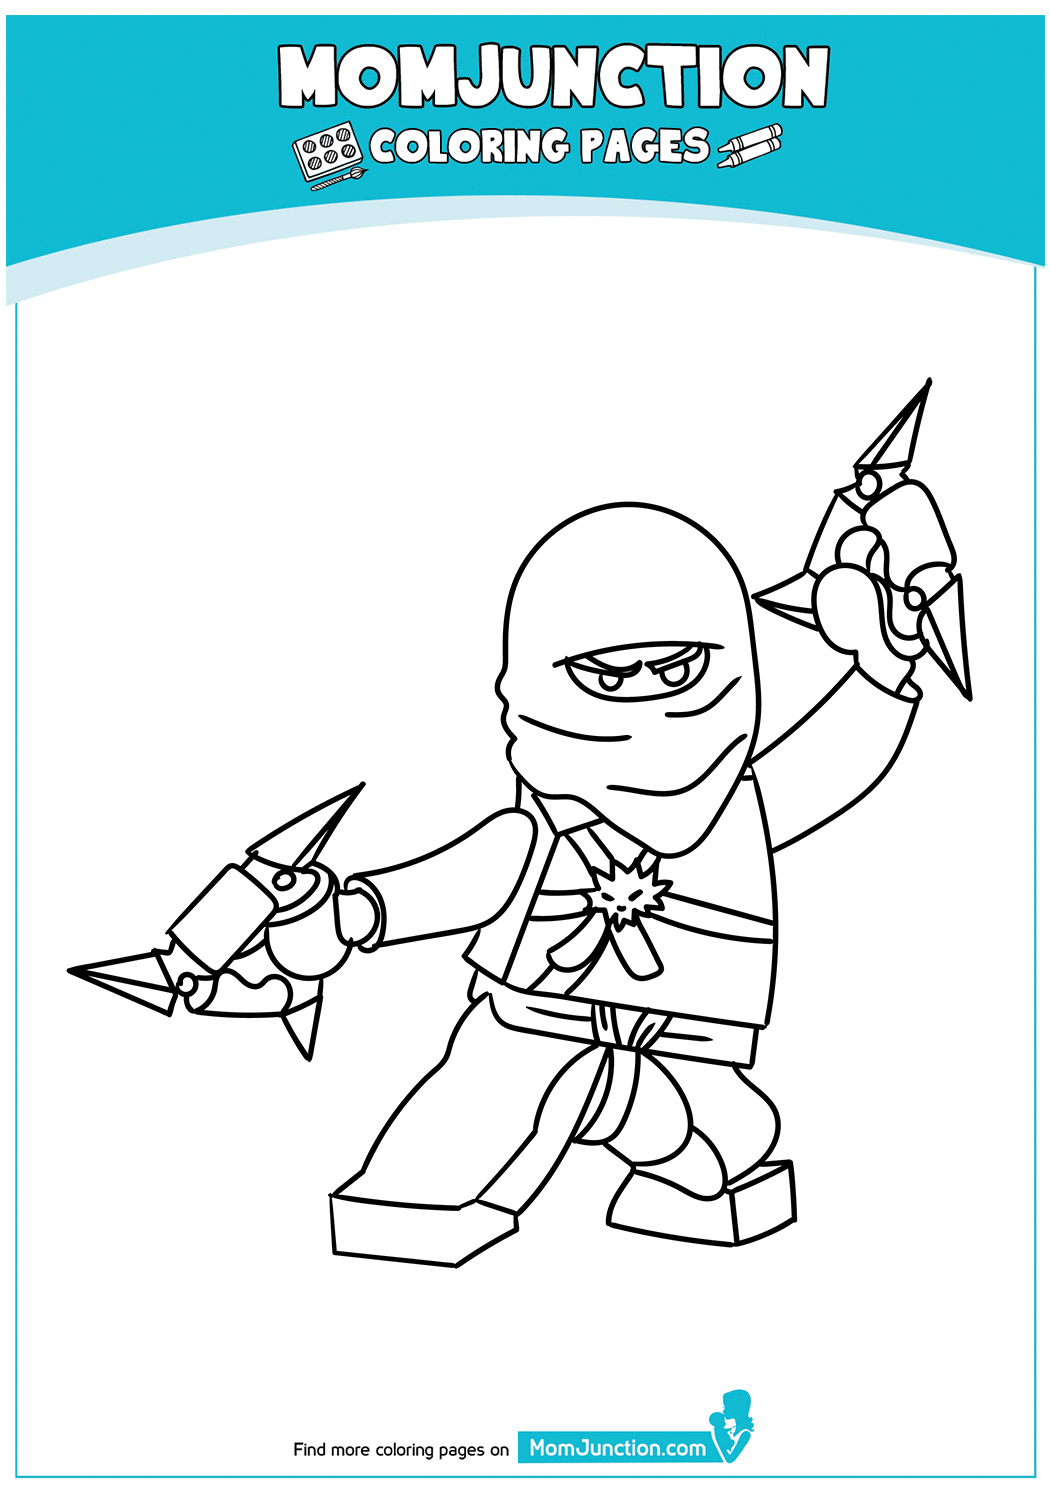 The-ninja-warrior-with-meal-triangular-blades